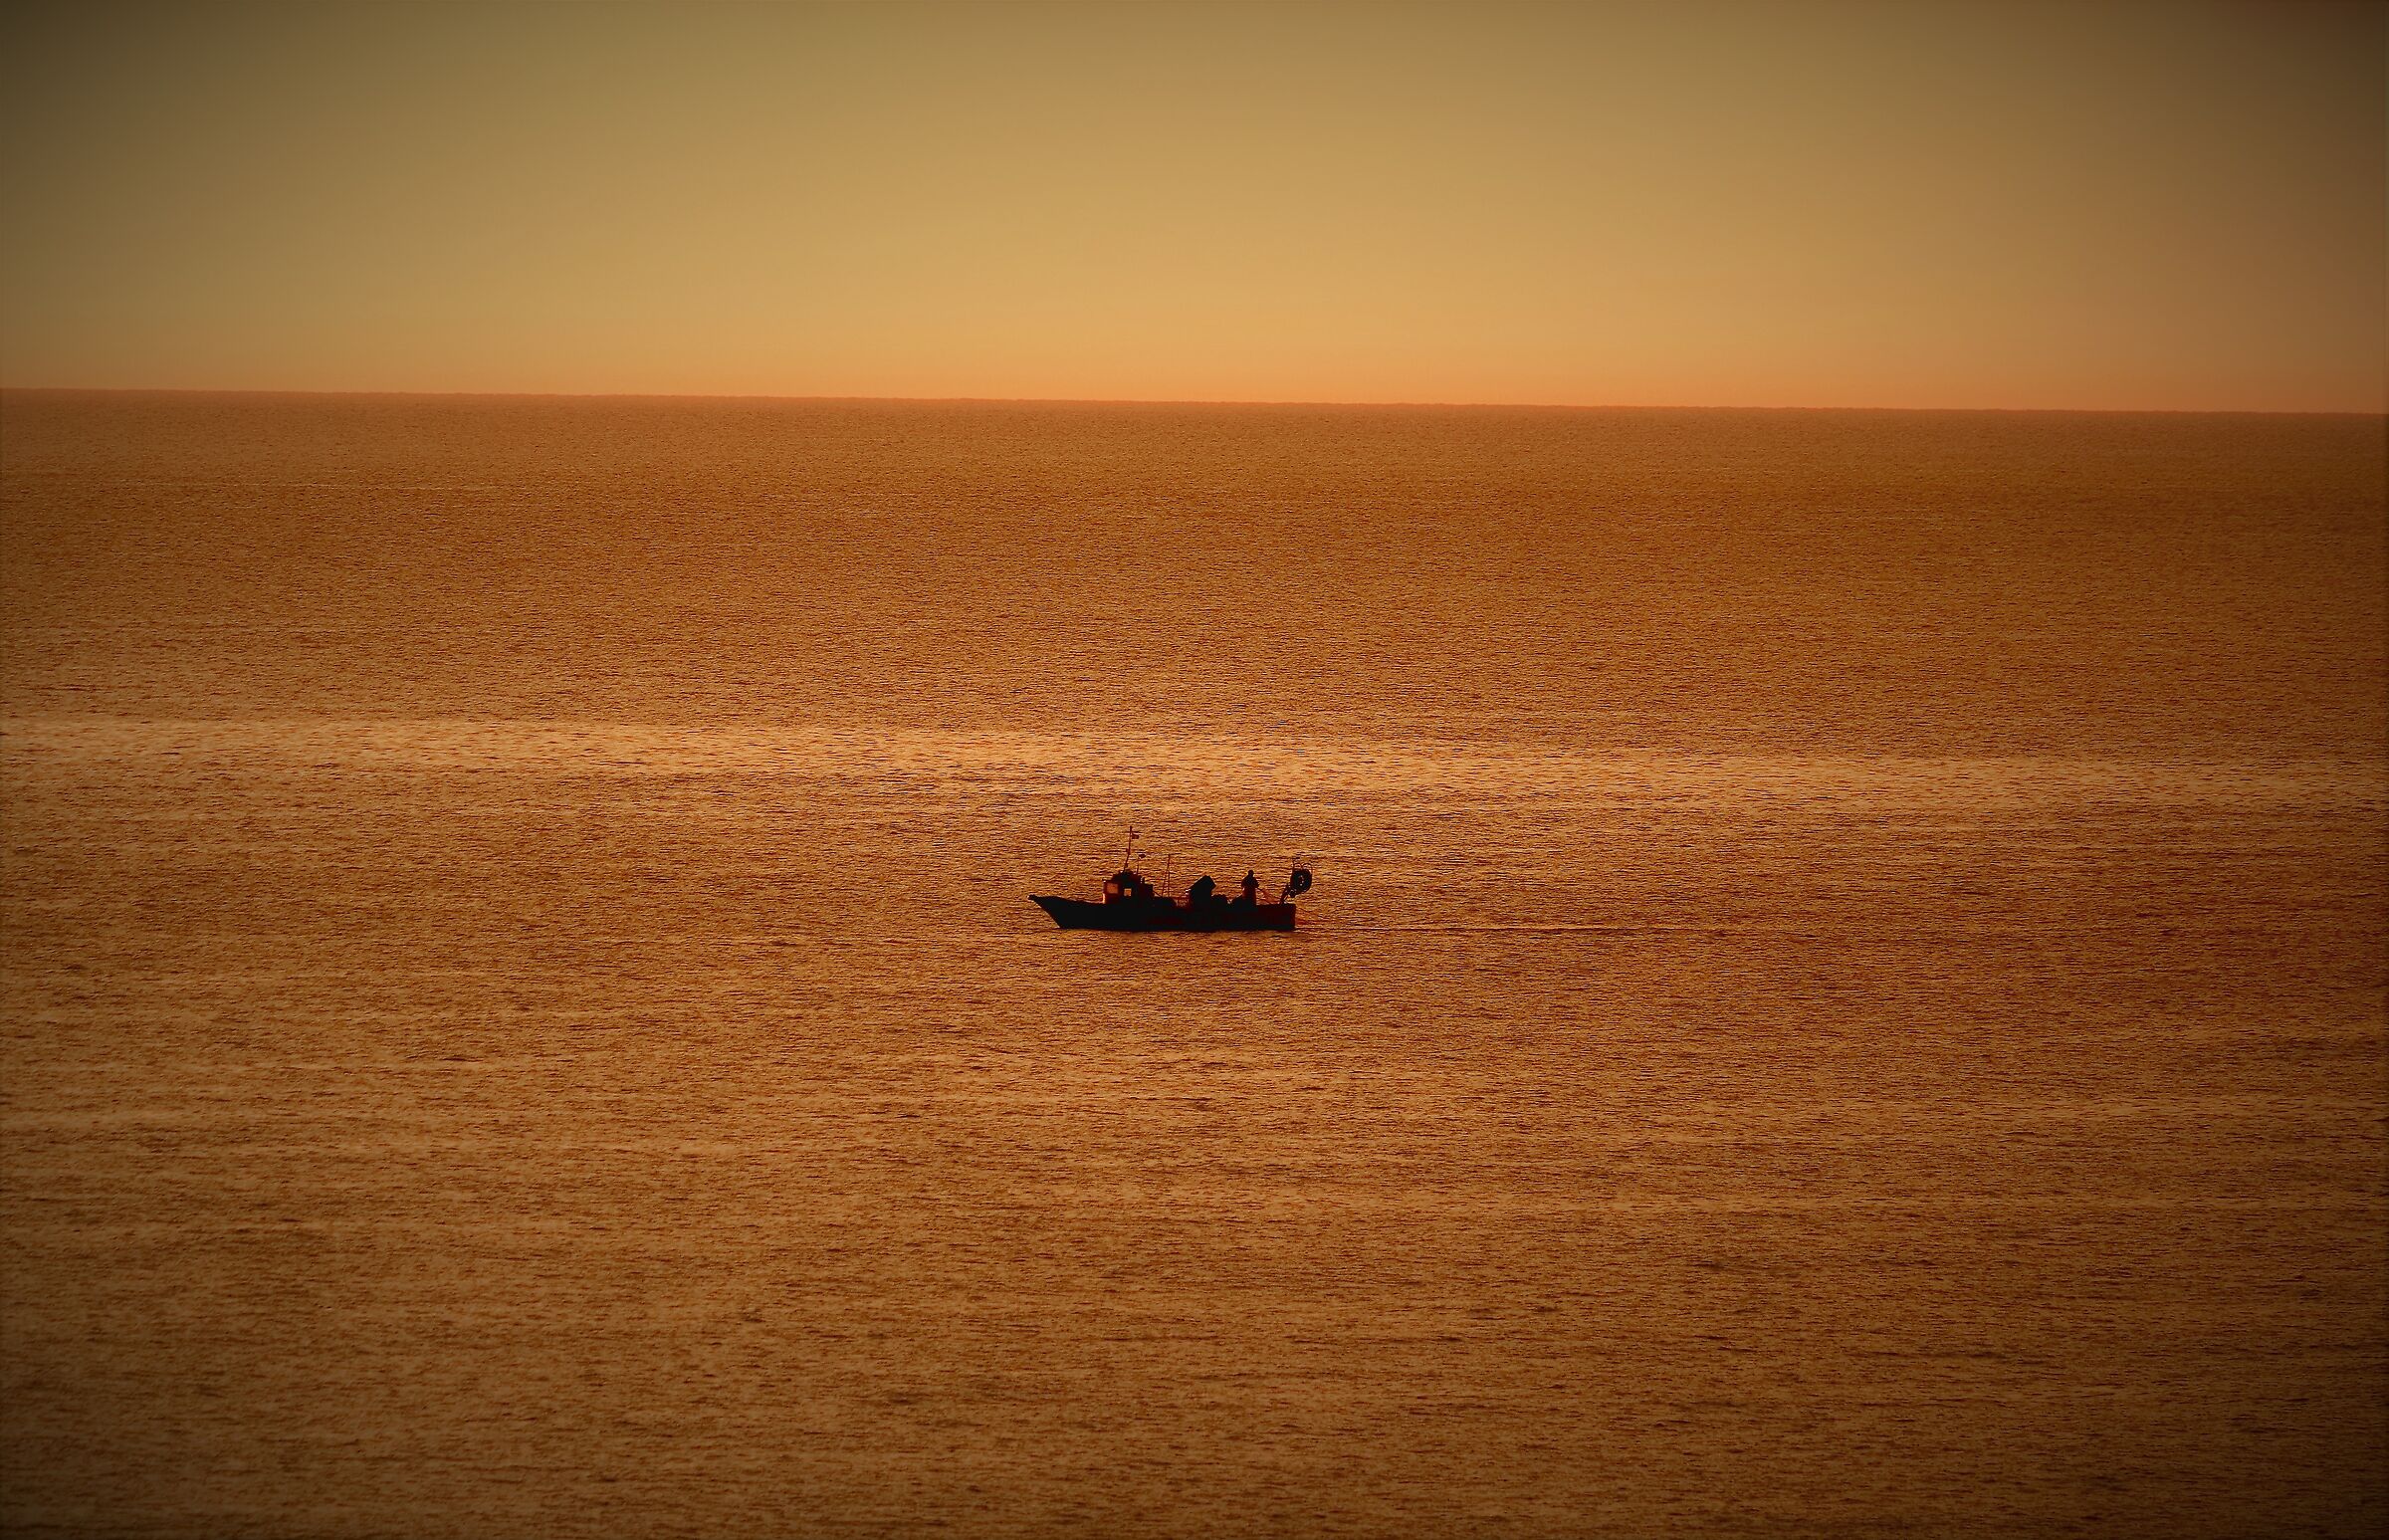 Sunset fishing...